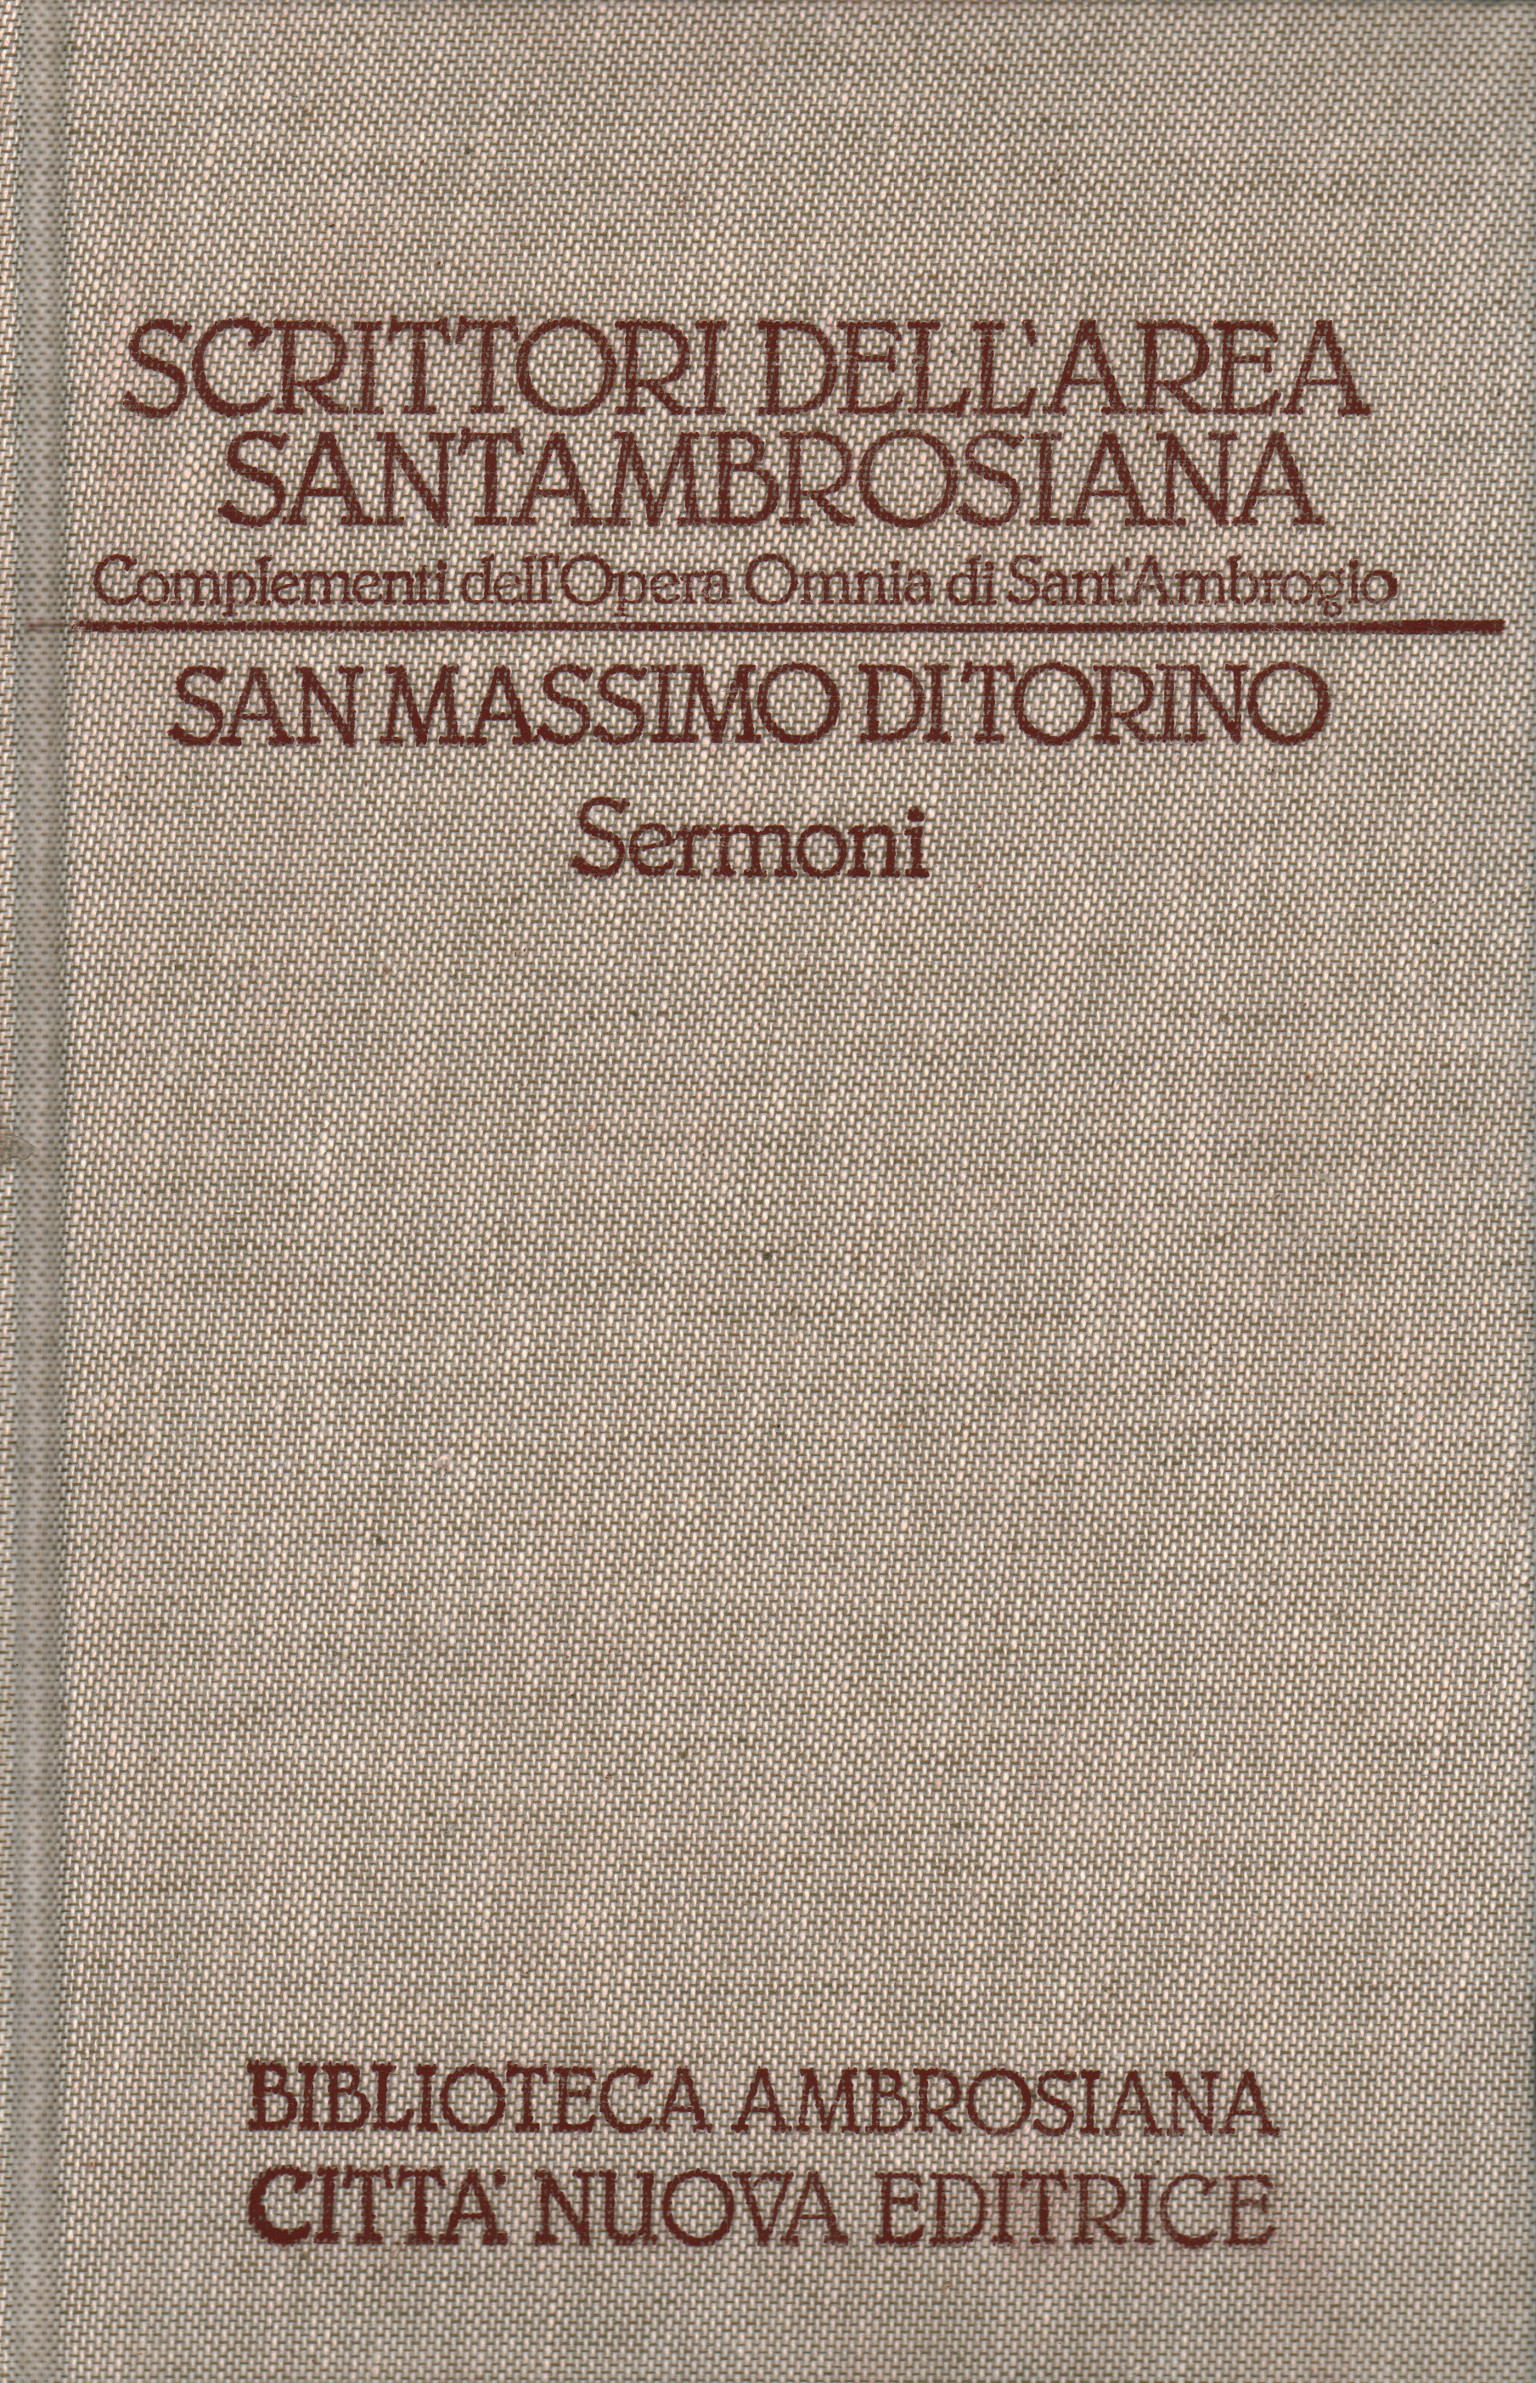 Writers of the Santambrosiana area., San Massimo of Turin - Sermoni (Volum, San Massimo of Turin. Sermoni